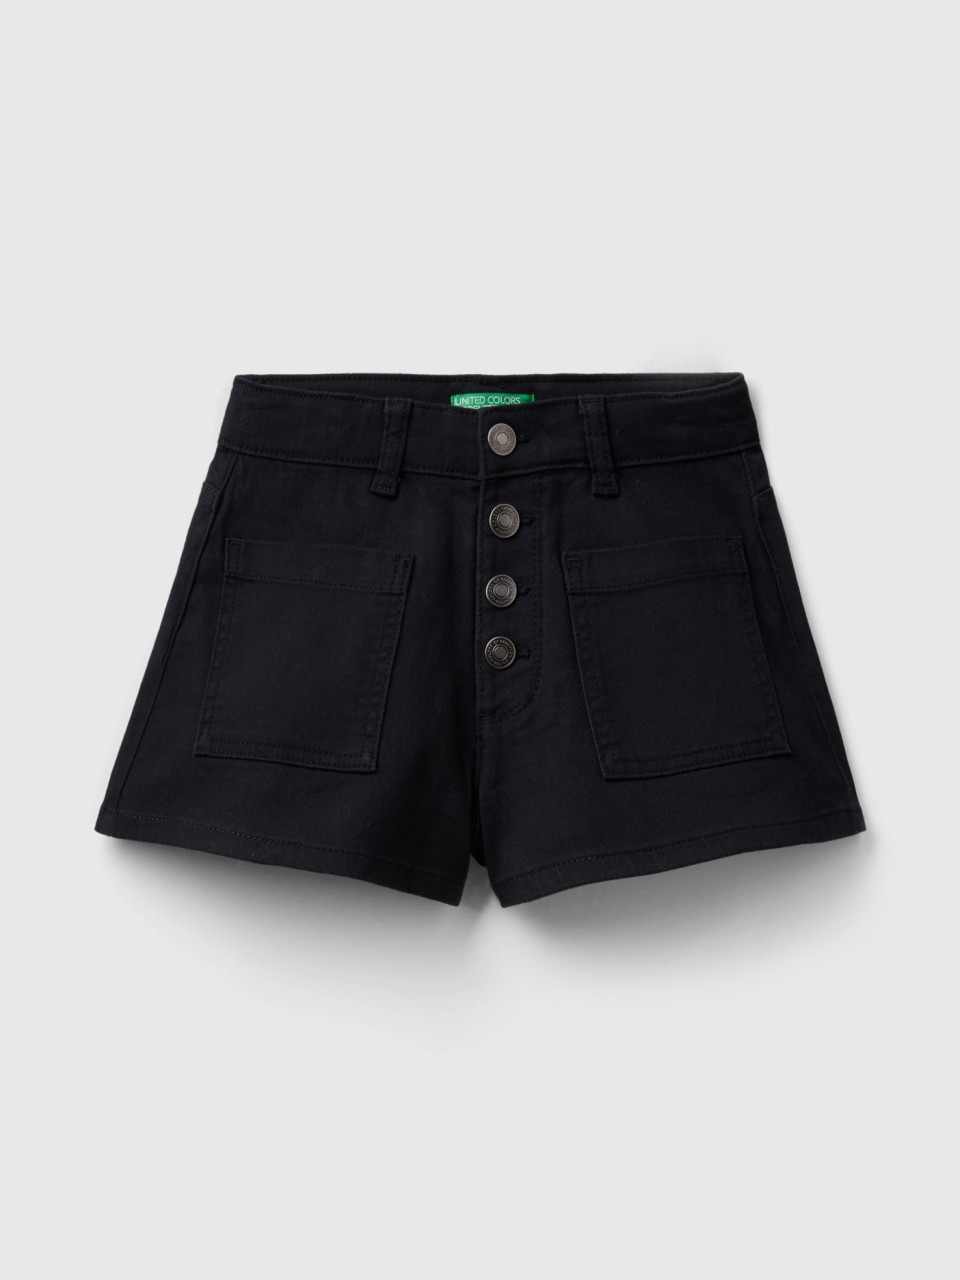 Benetton, Stretch Cotton Shorts, Black, Kids